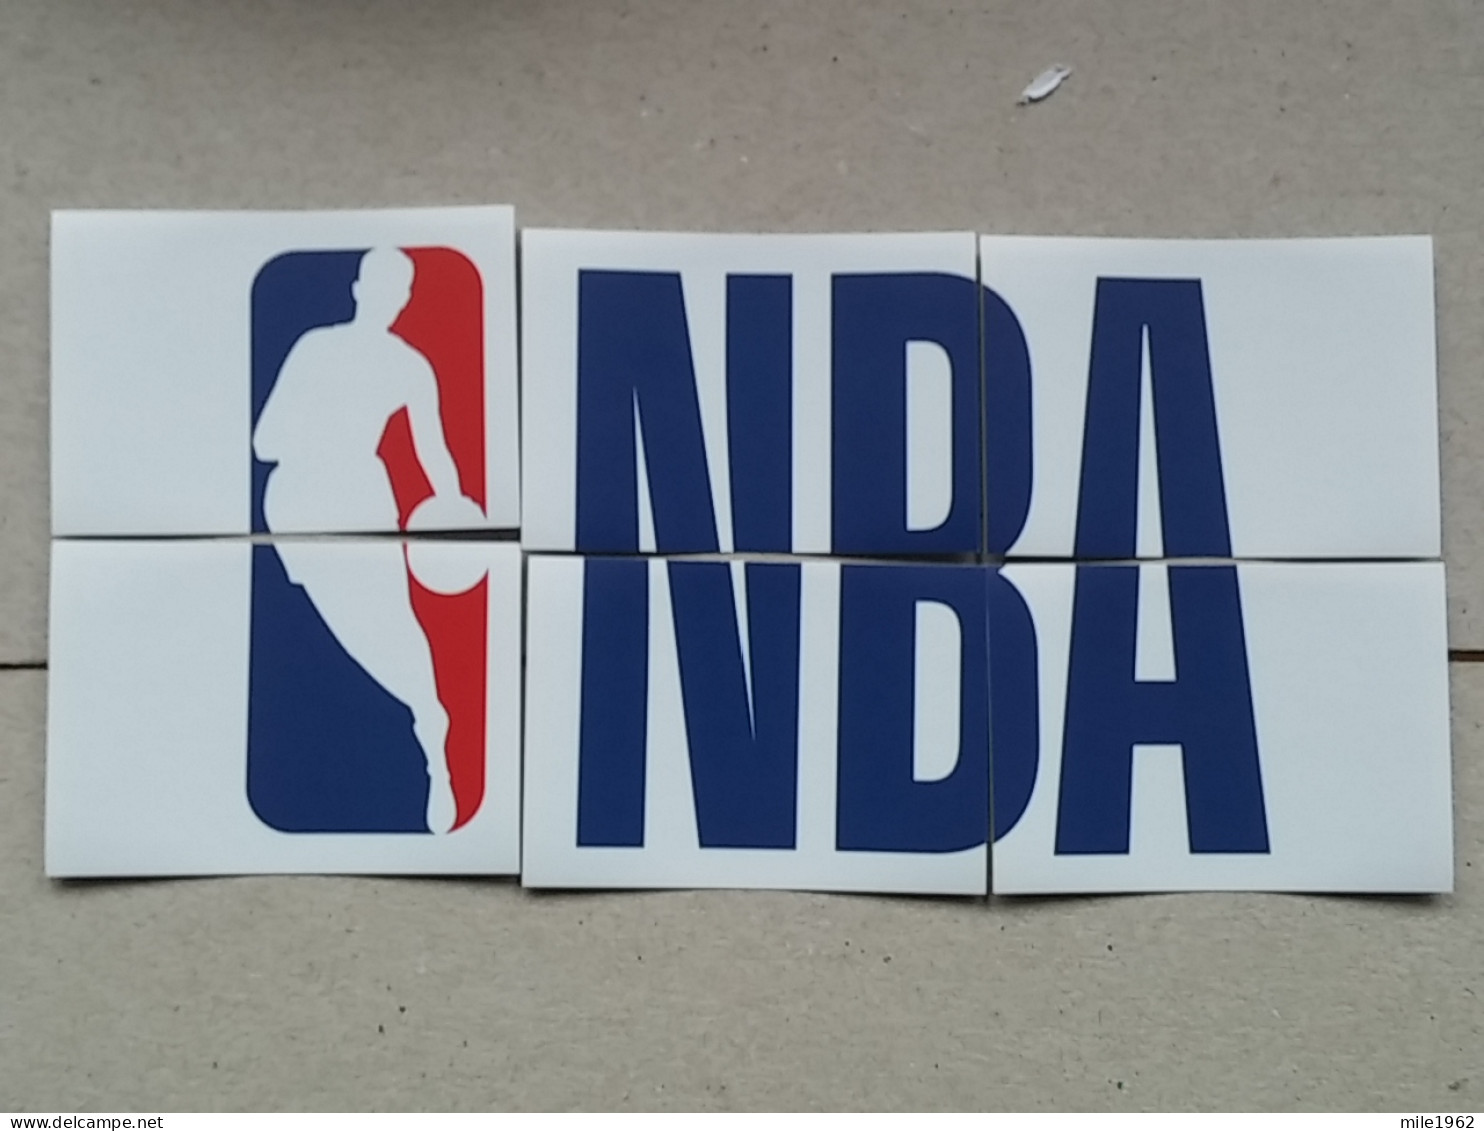 ST 53 - NBA Basketball 2022-23, Sticker, Autocollant, PANINI, No 506-511 NBA LOGO - 2000-Aujourd'hui